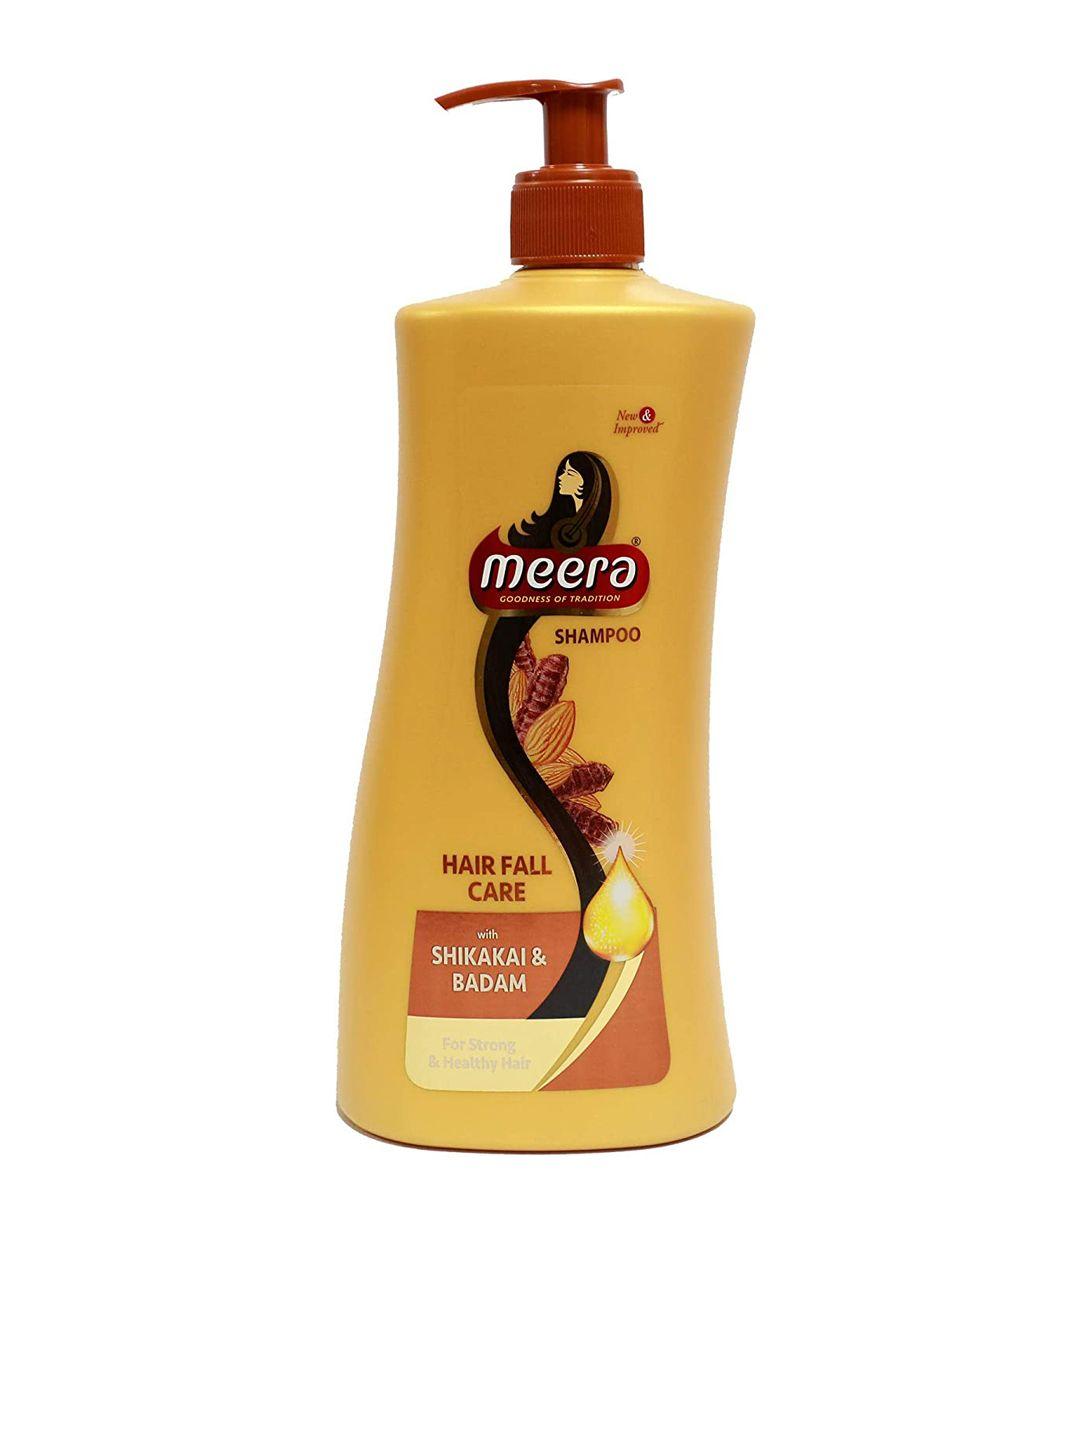 meera goodness of tradition hairfall care shampoo infused with shikakai & badam 650 ml